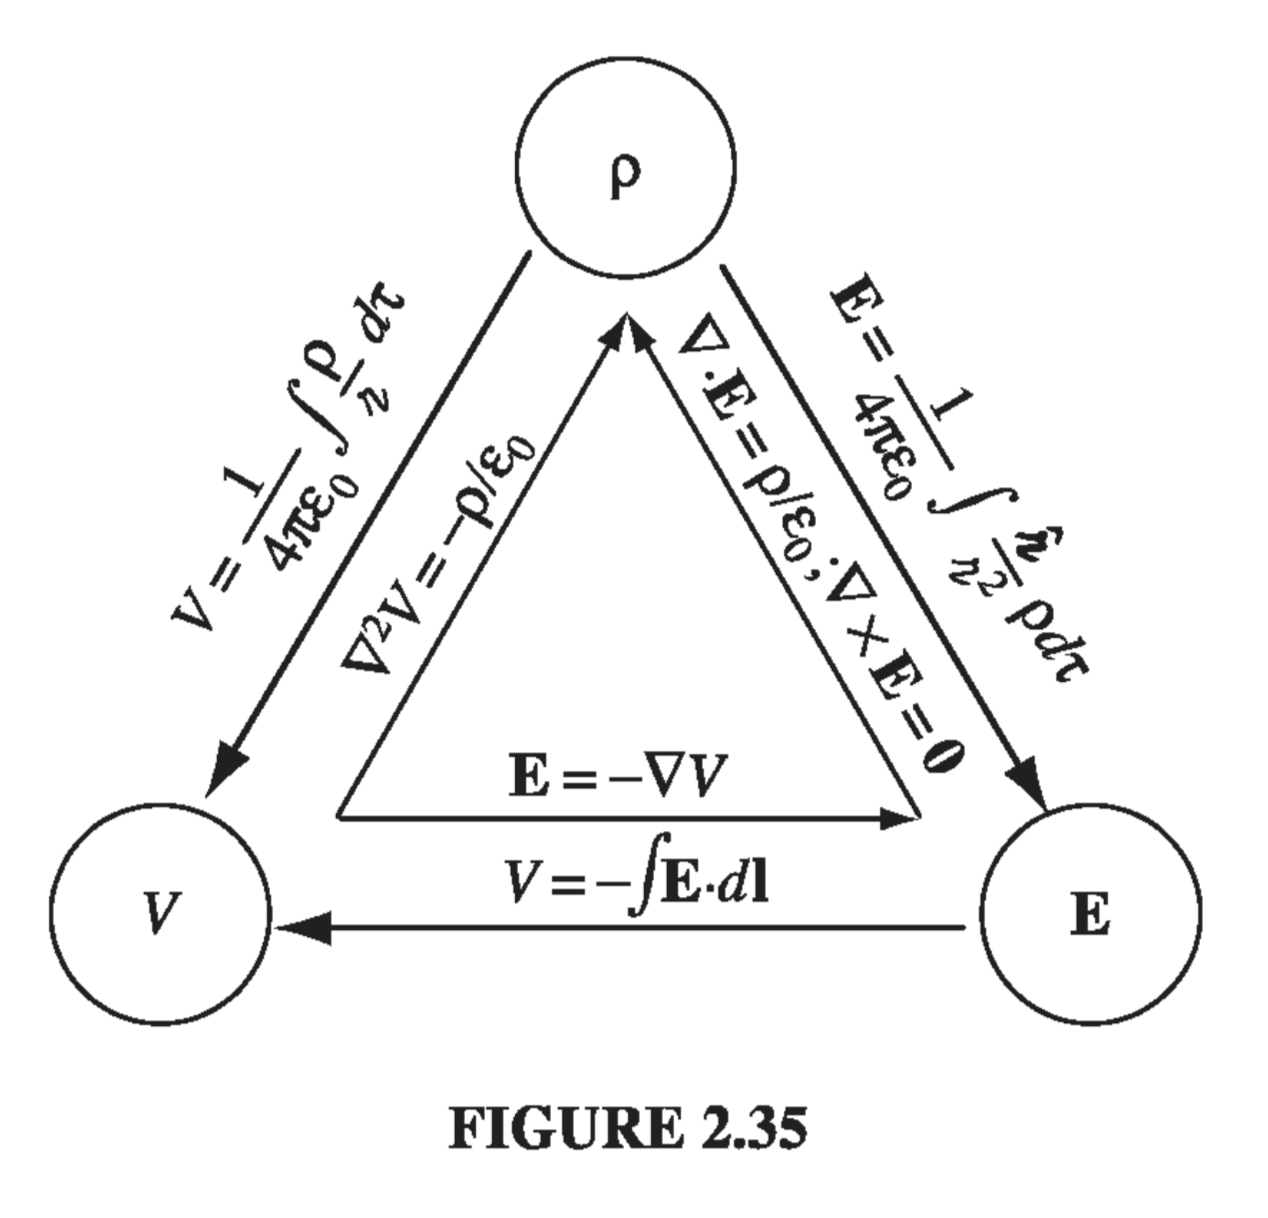 Figure 2.35